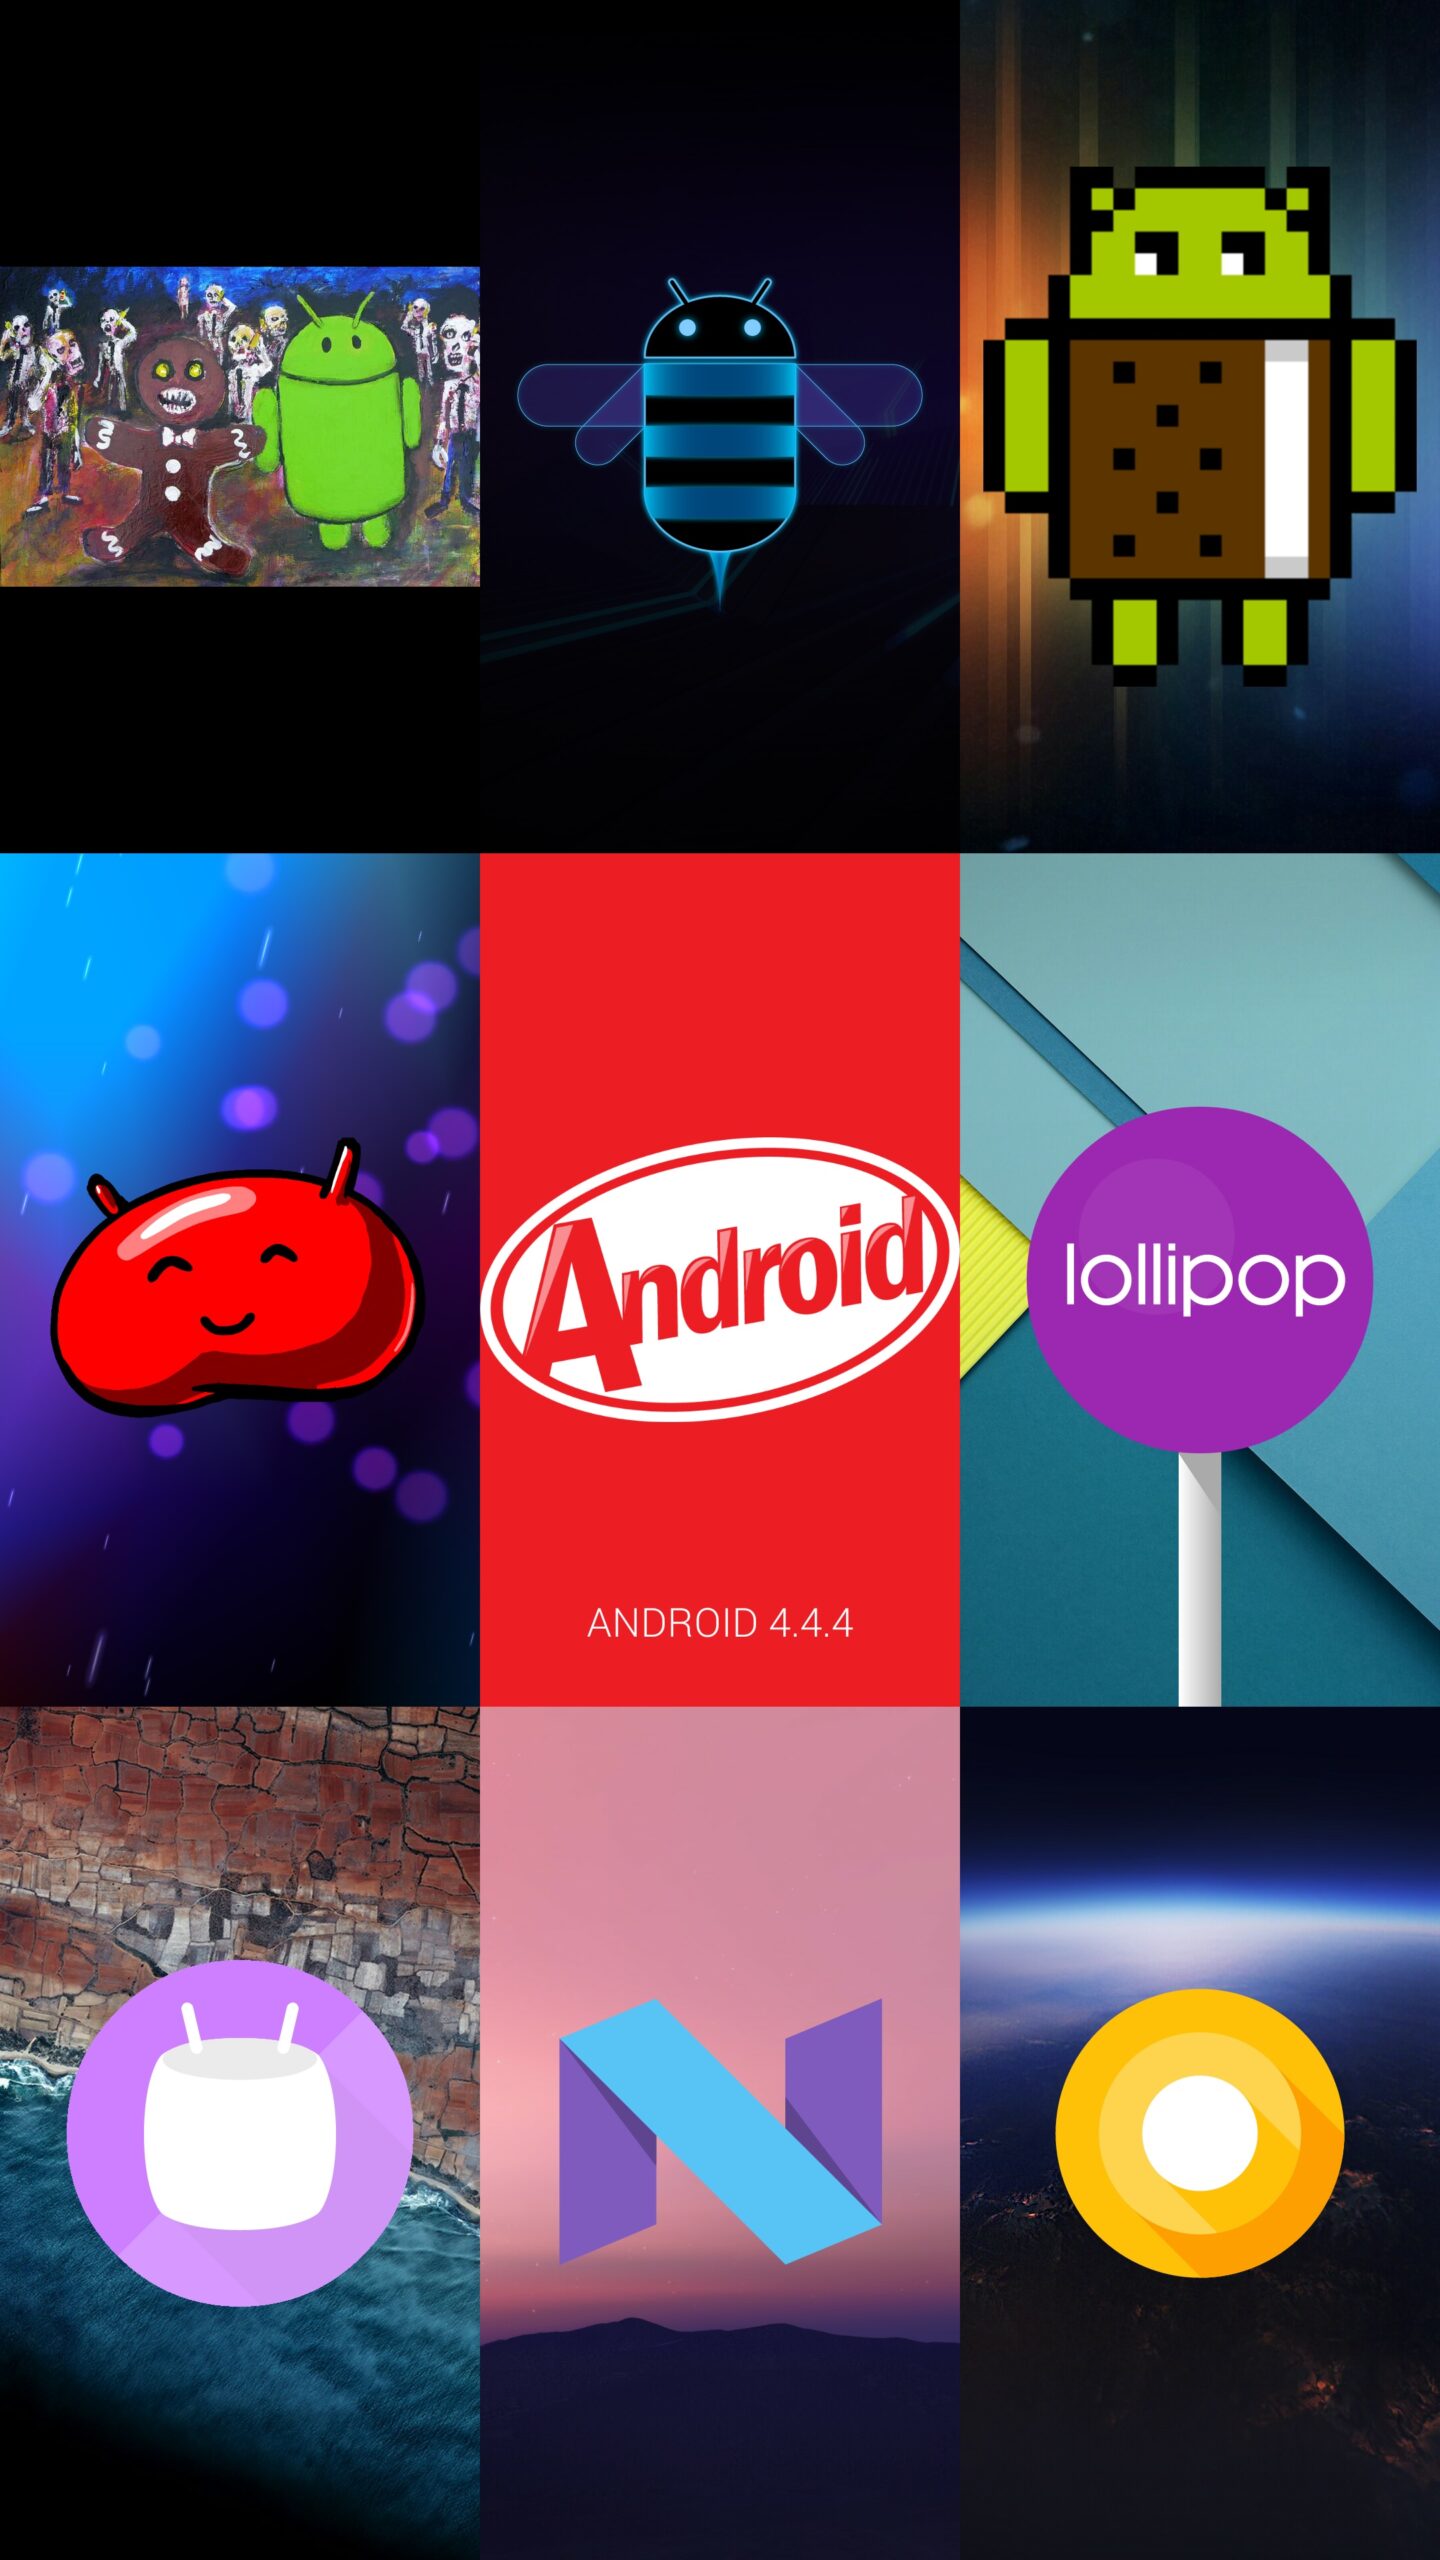 Merangkai Pencarian Gadget Android: Ruang Menginspirasi dalam Aplikasi!